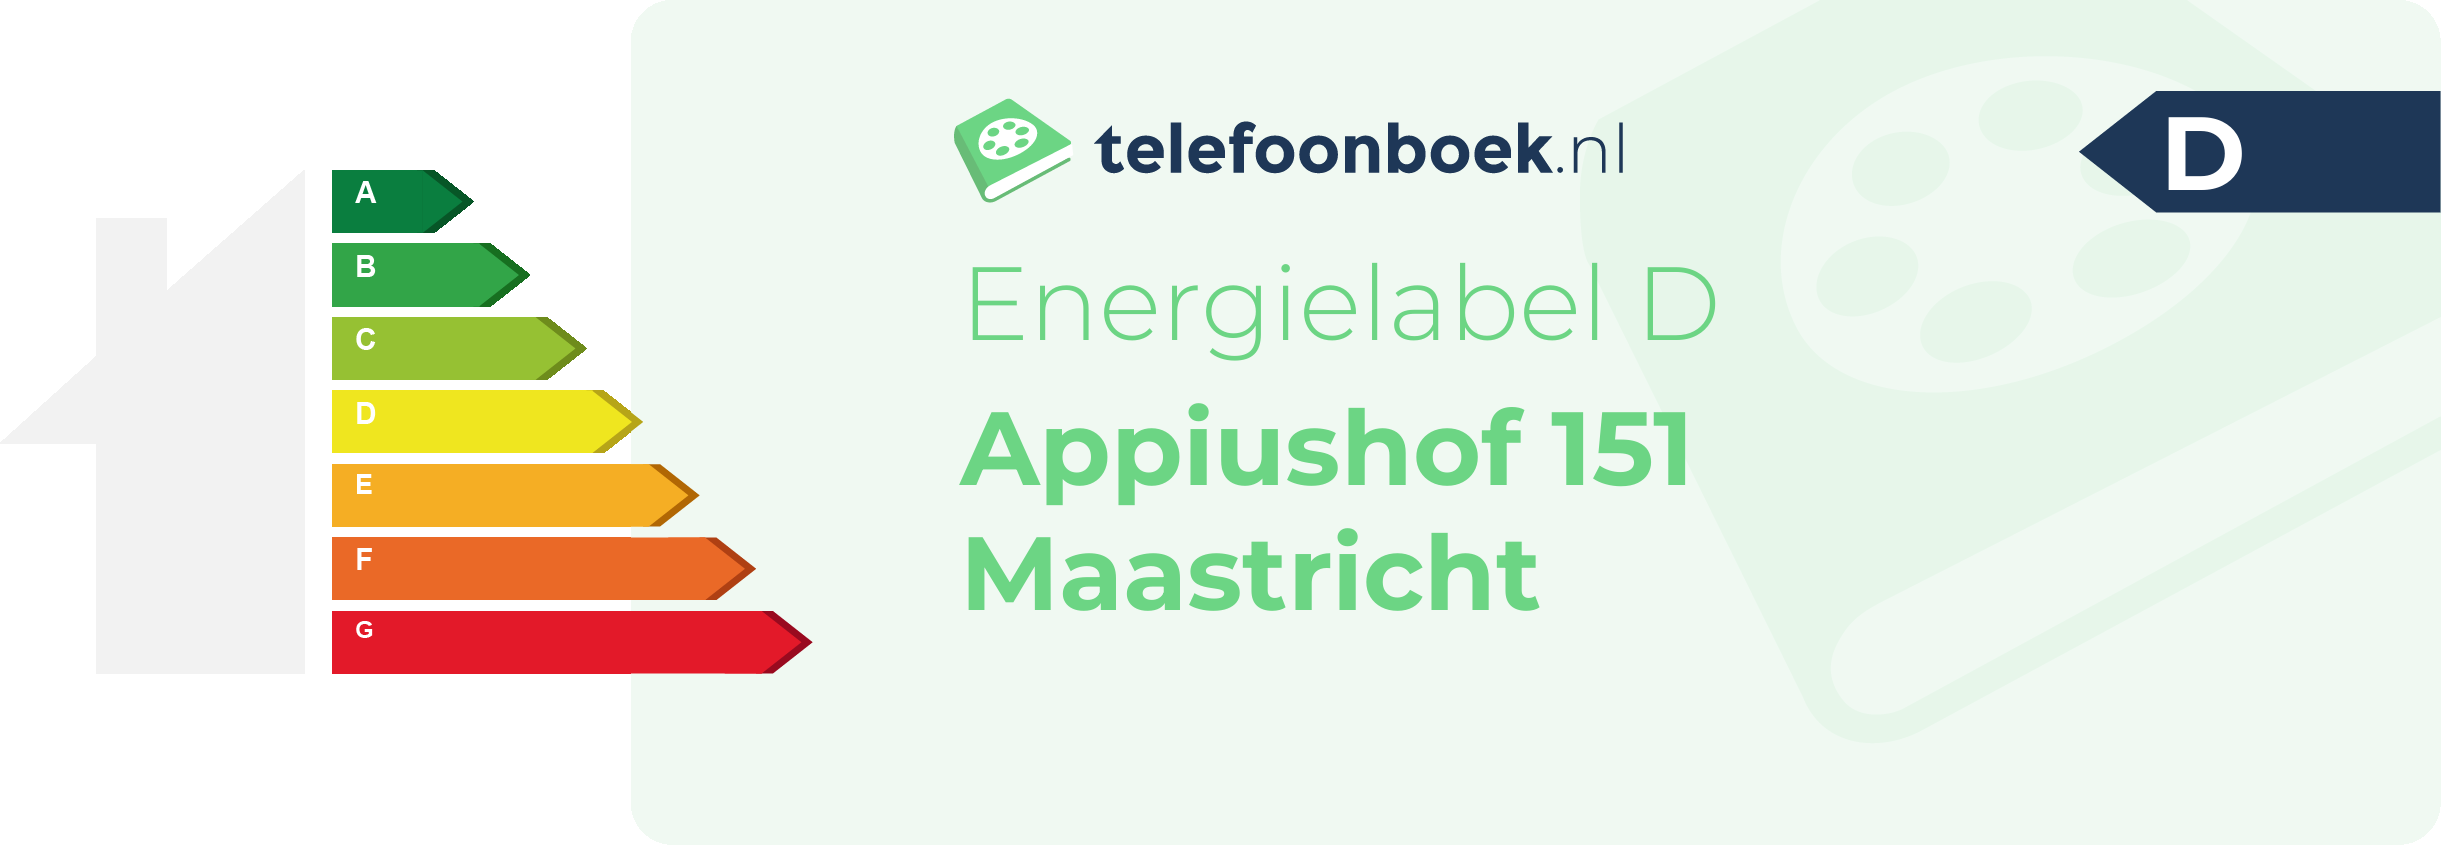 Energielabel Appiushof 151 Maastricht